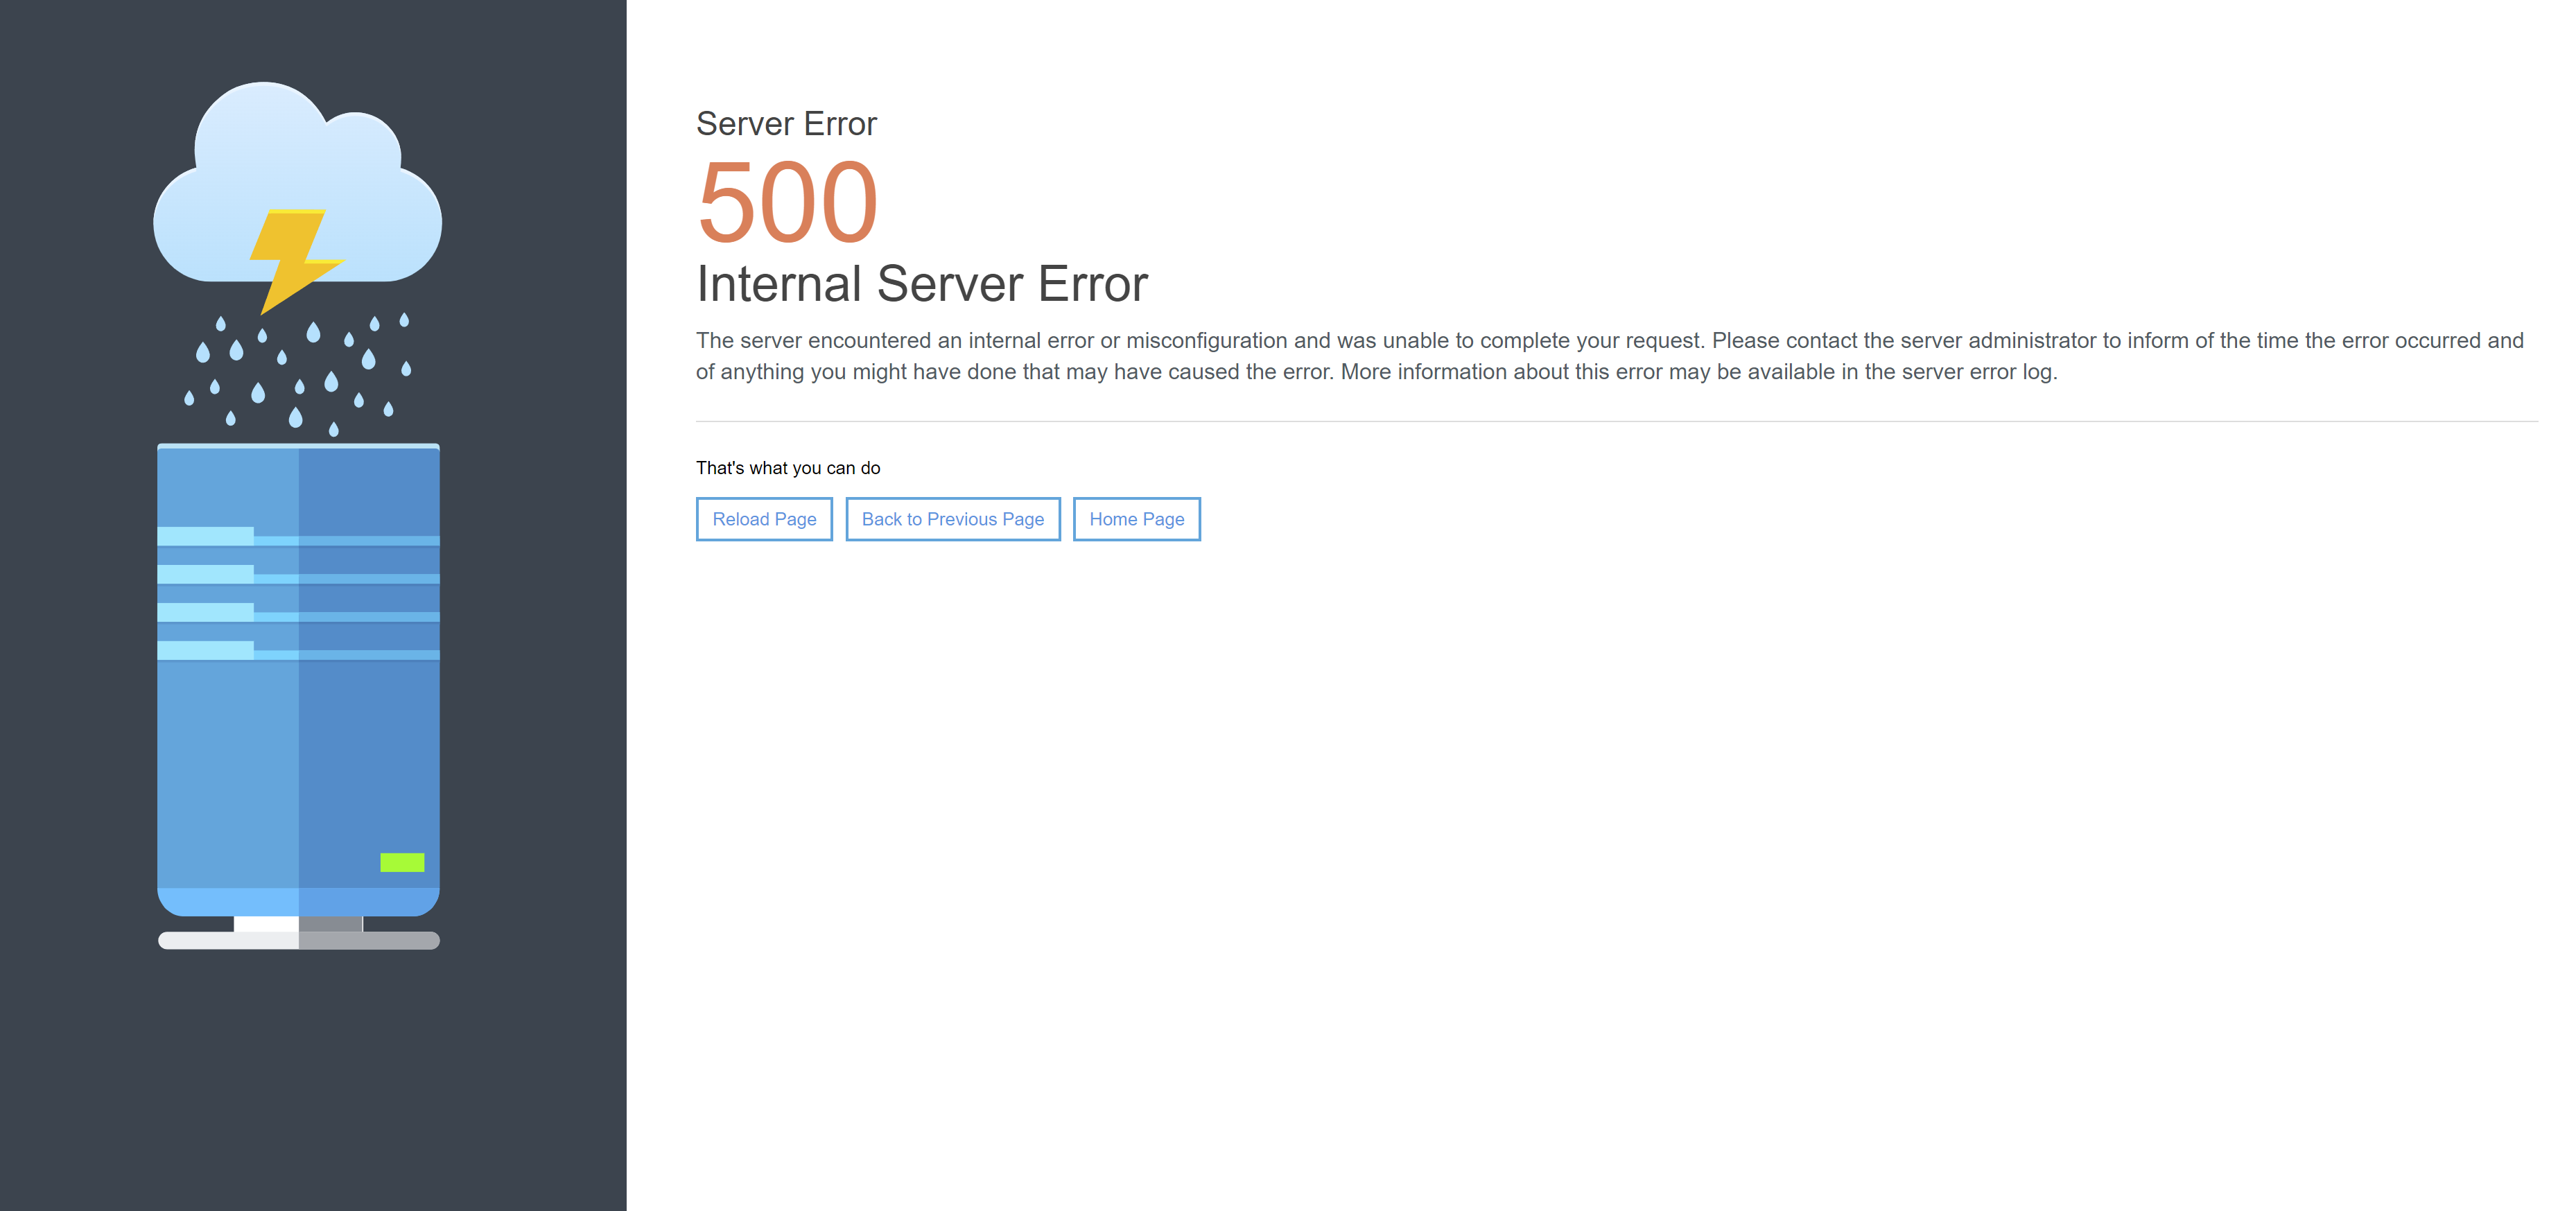 The server encountered an internal error. 500 Internal Server Error. 500 Ошибка сервера. 401 Authorization required. Ошибка телеграмм Internal Server Error.